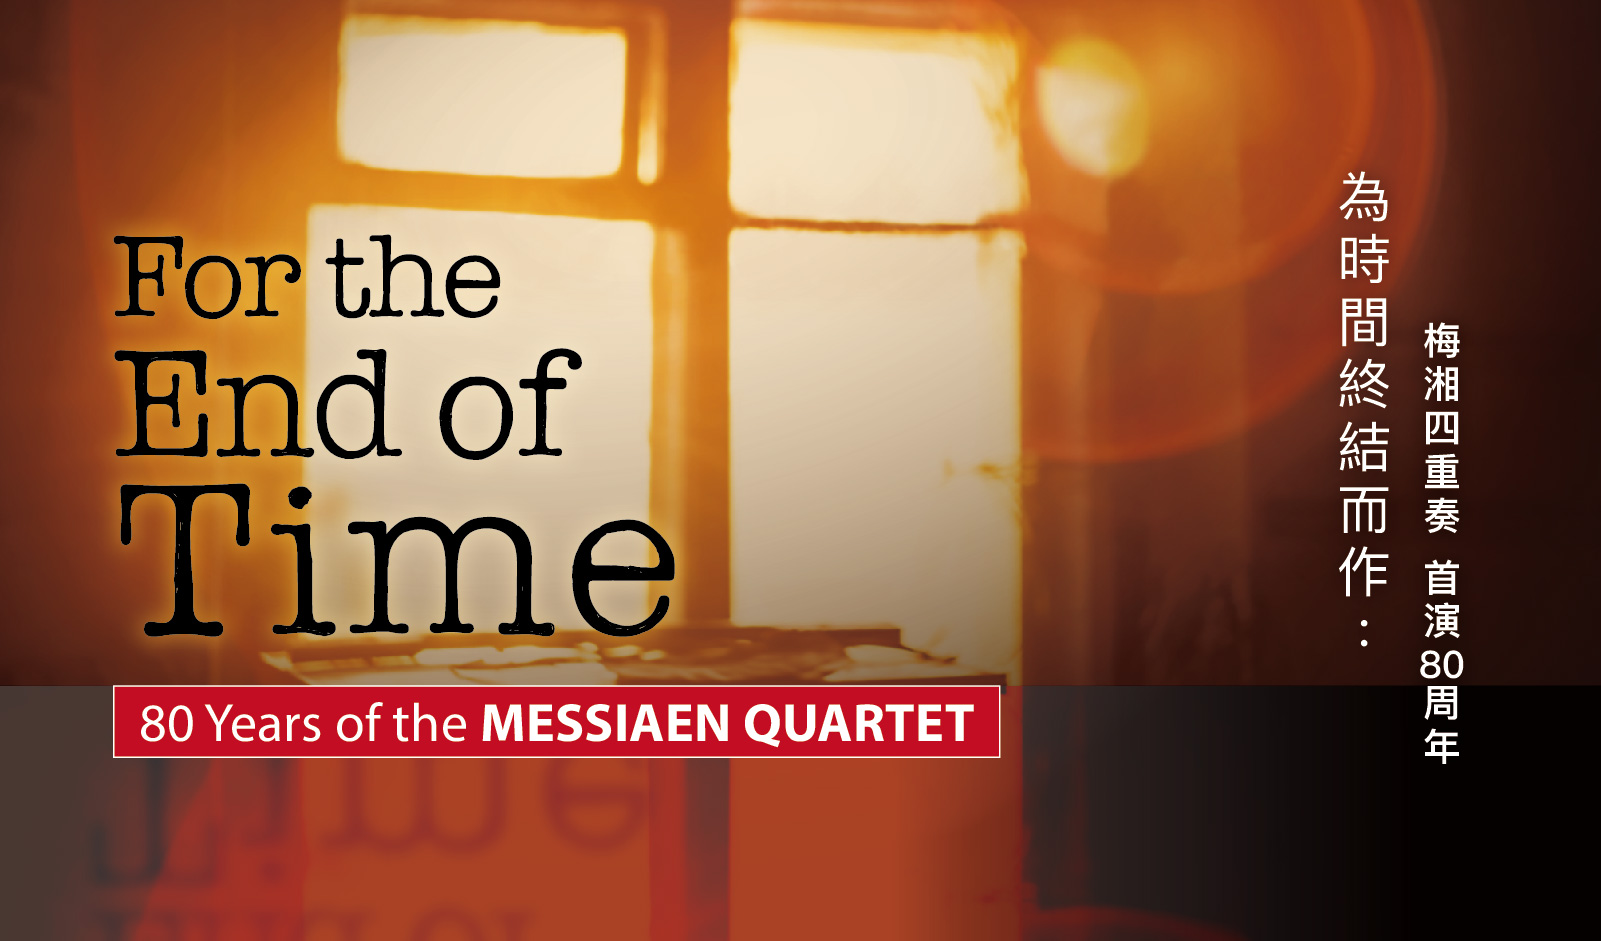 Messiaen’s Quartet